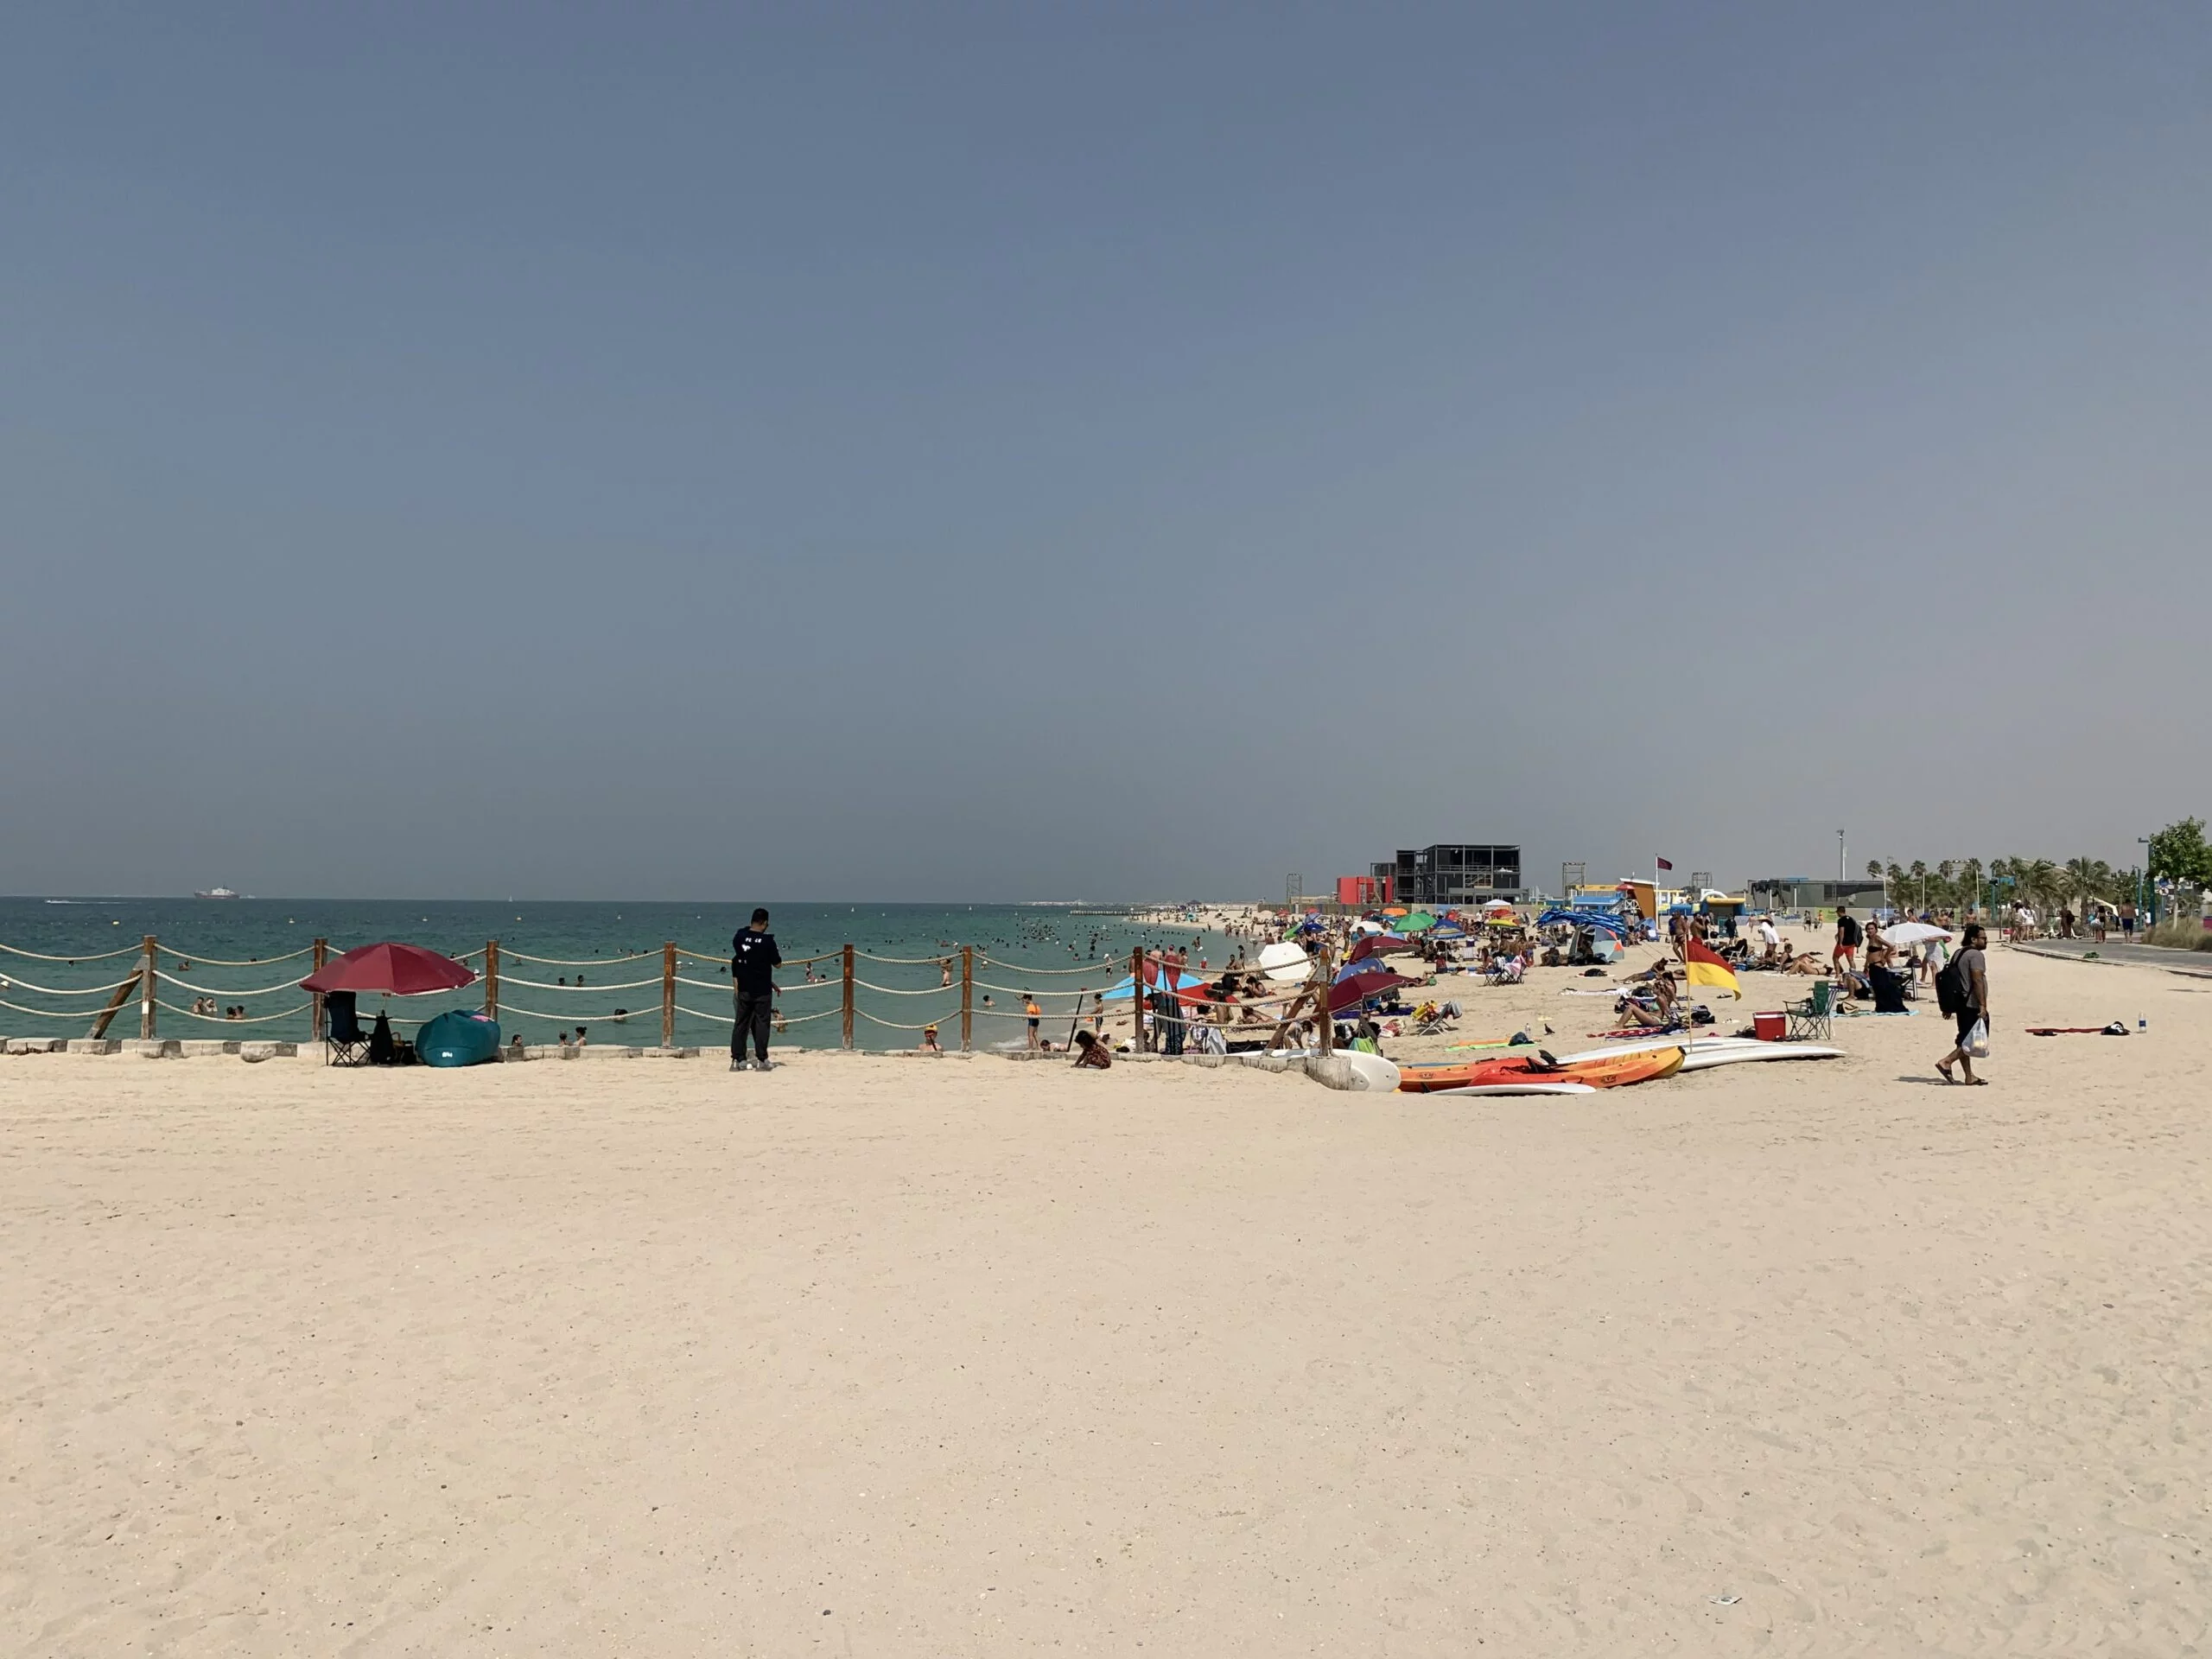 Kite Beach - one of free beaches in Dubai